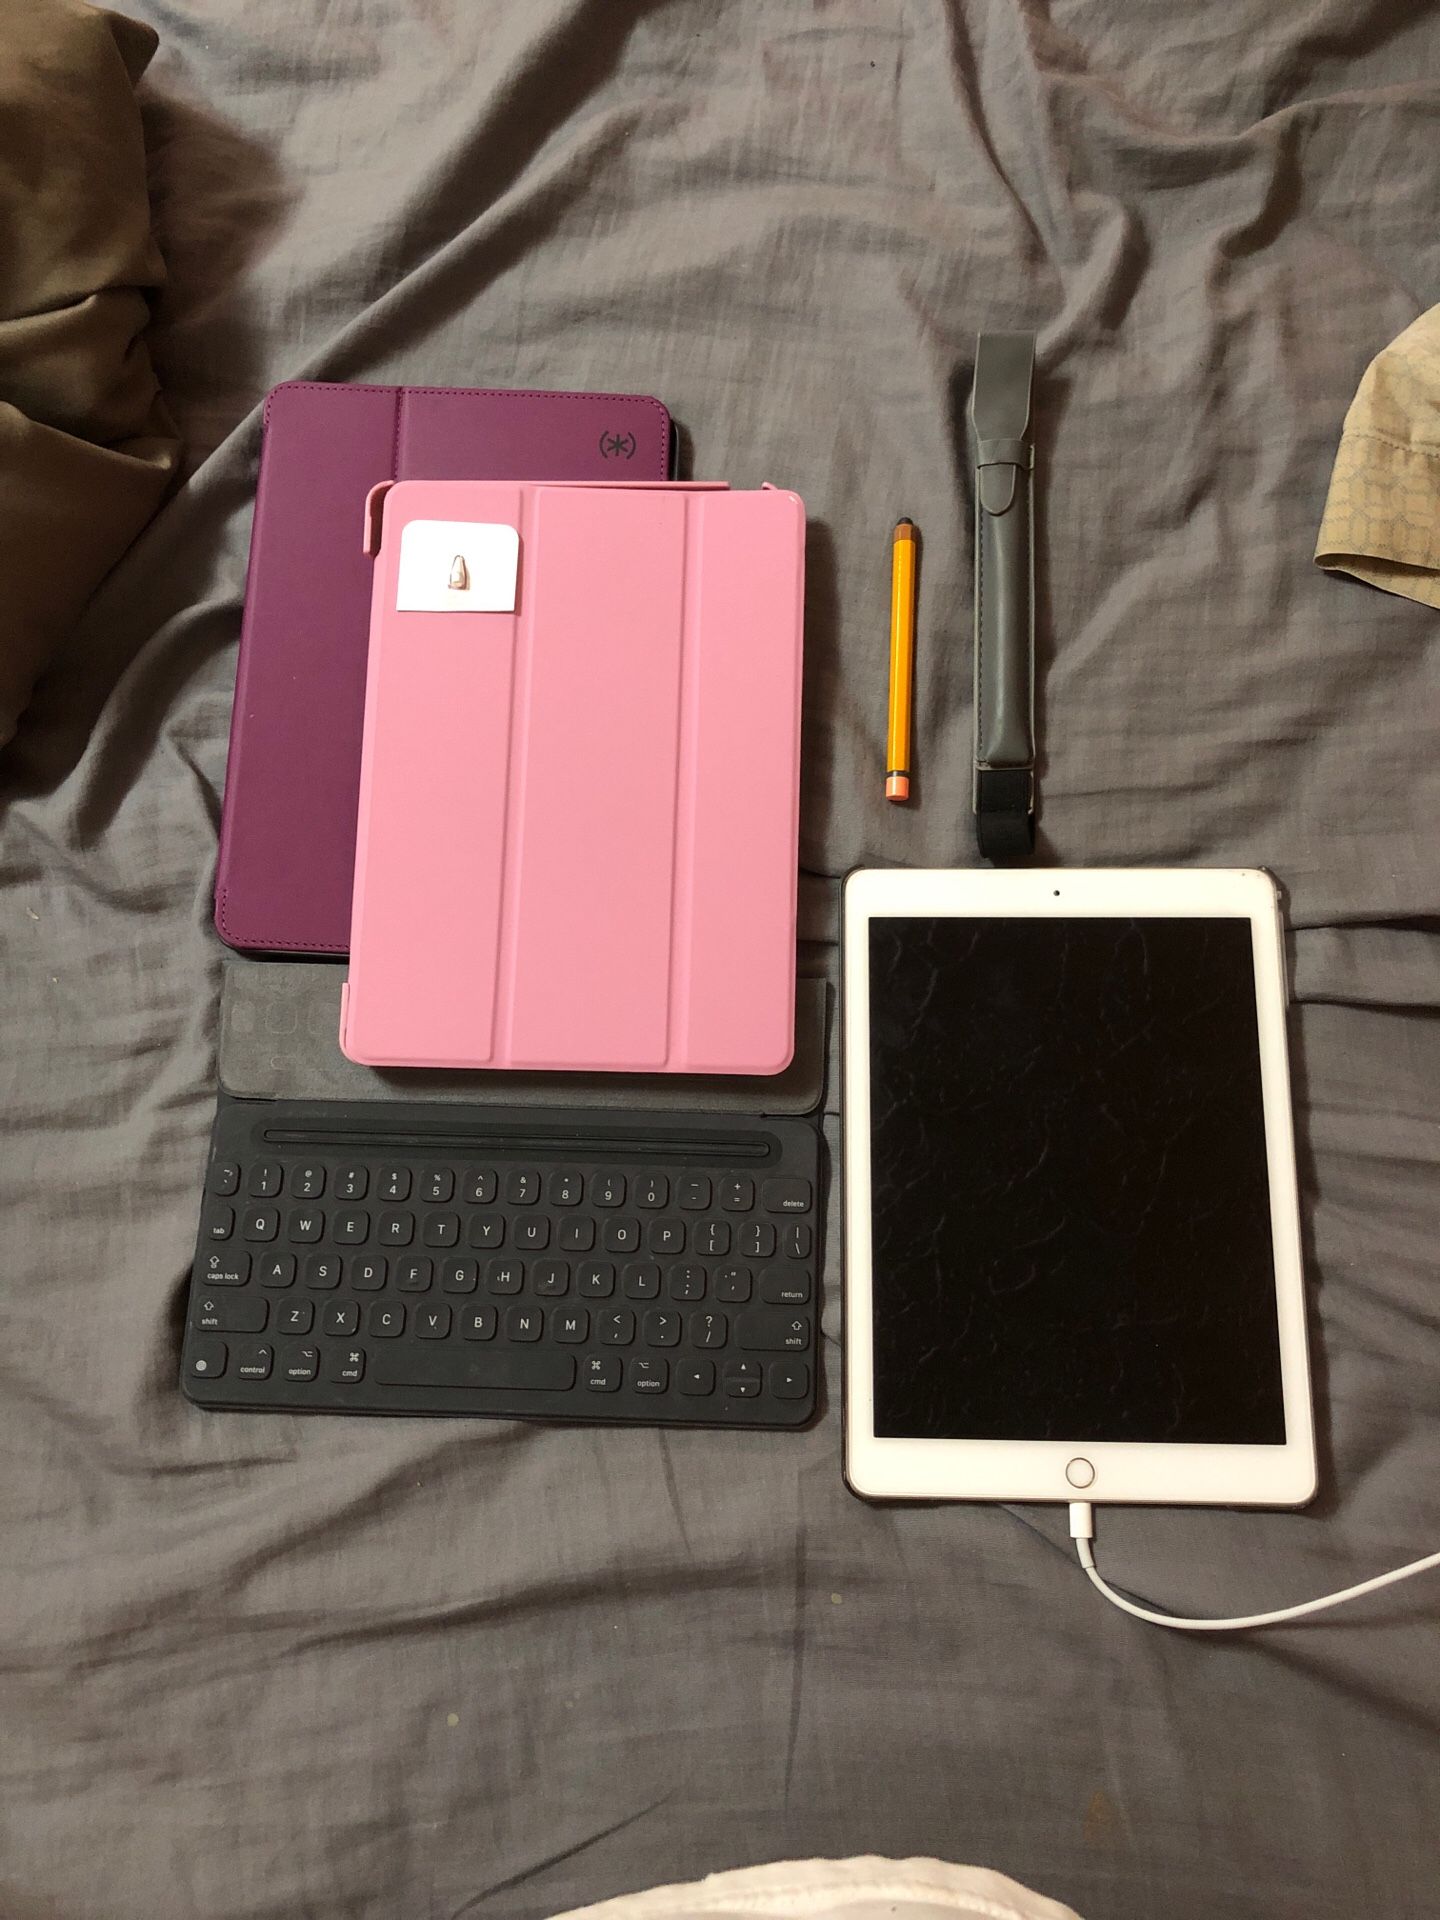 iPad Pro 9.7 inch and apple keyboard